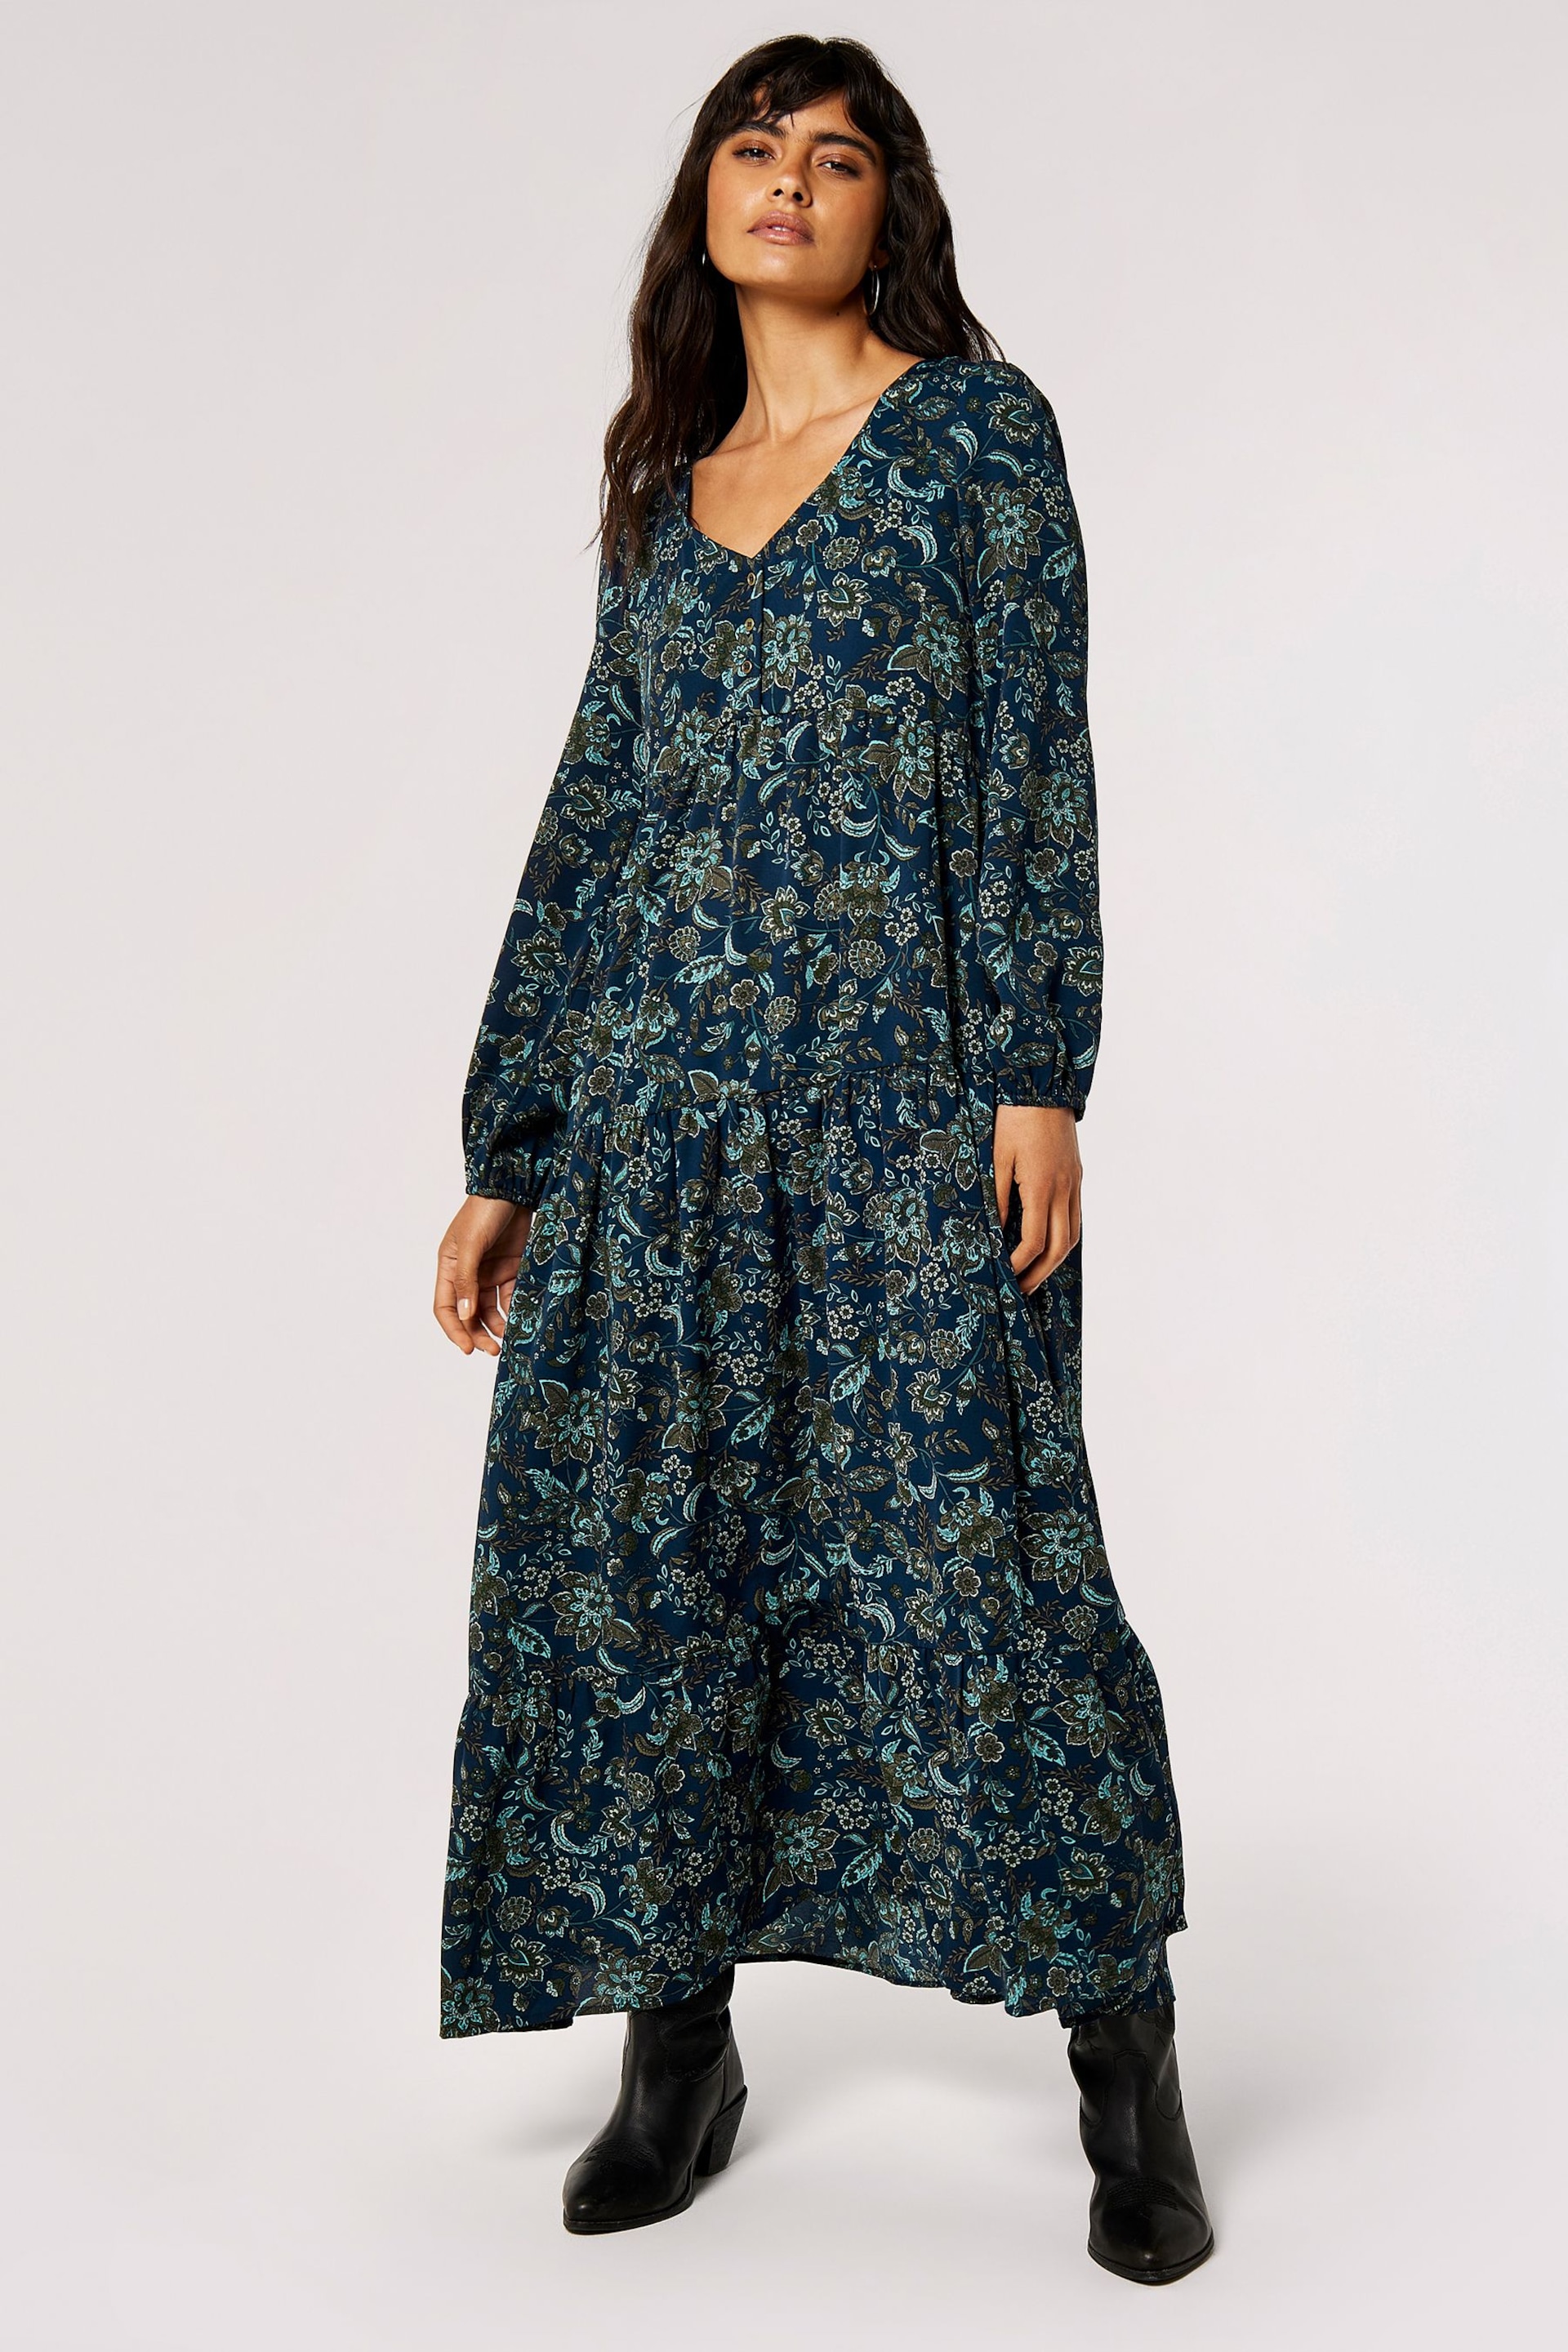 Apricot Blue Floral Enchantment Maxi Dress - Image 1 of 4